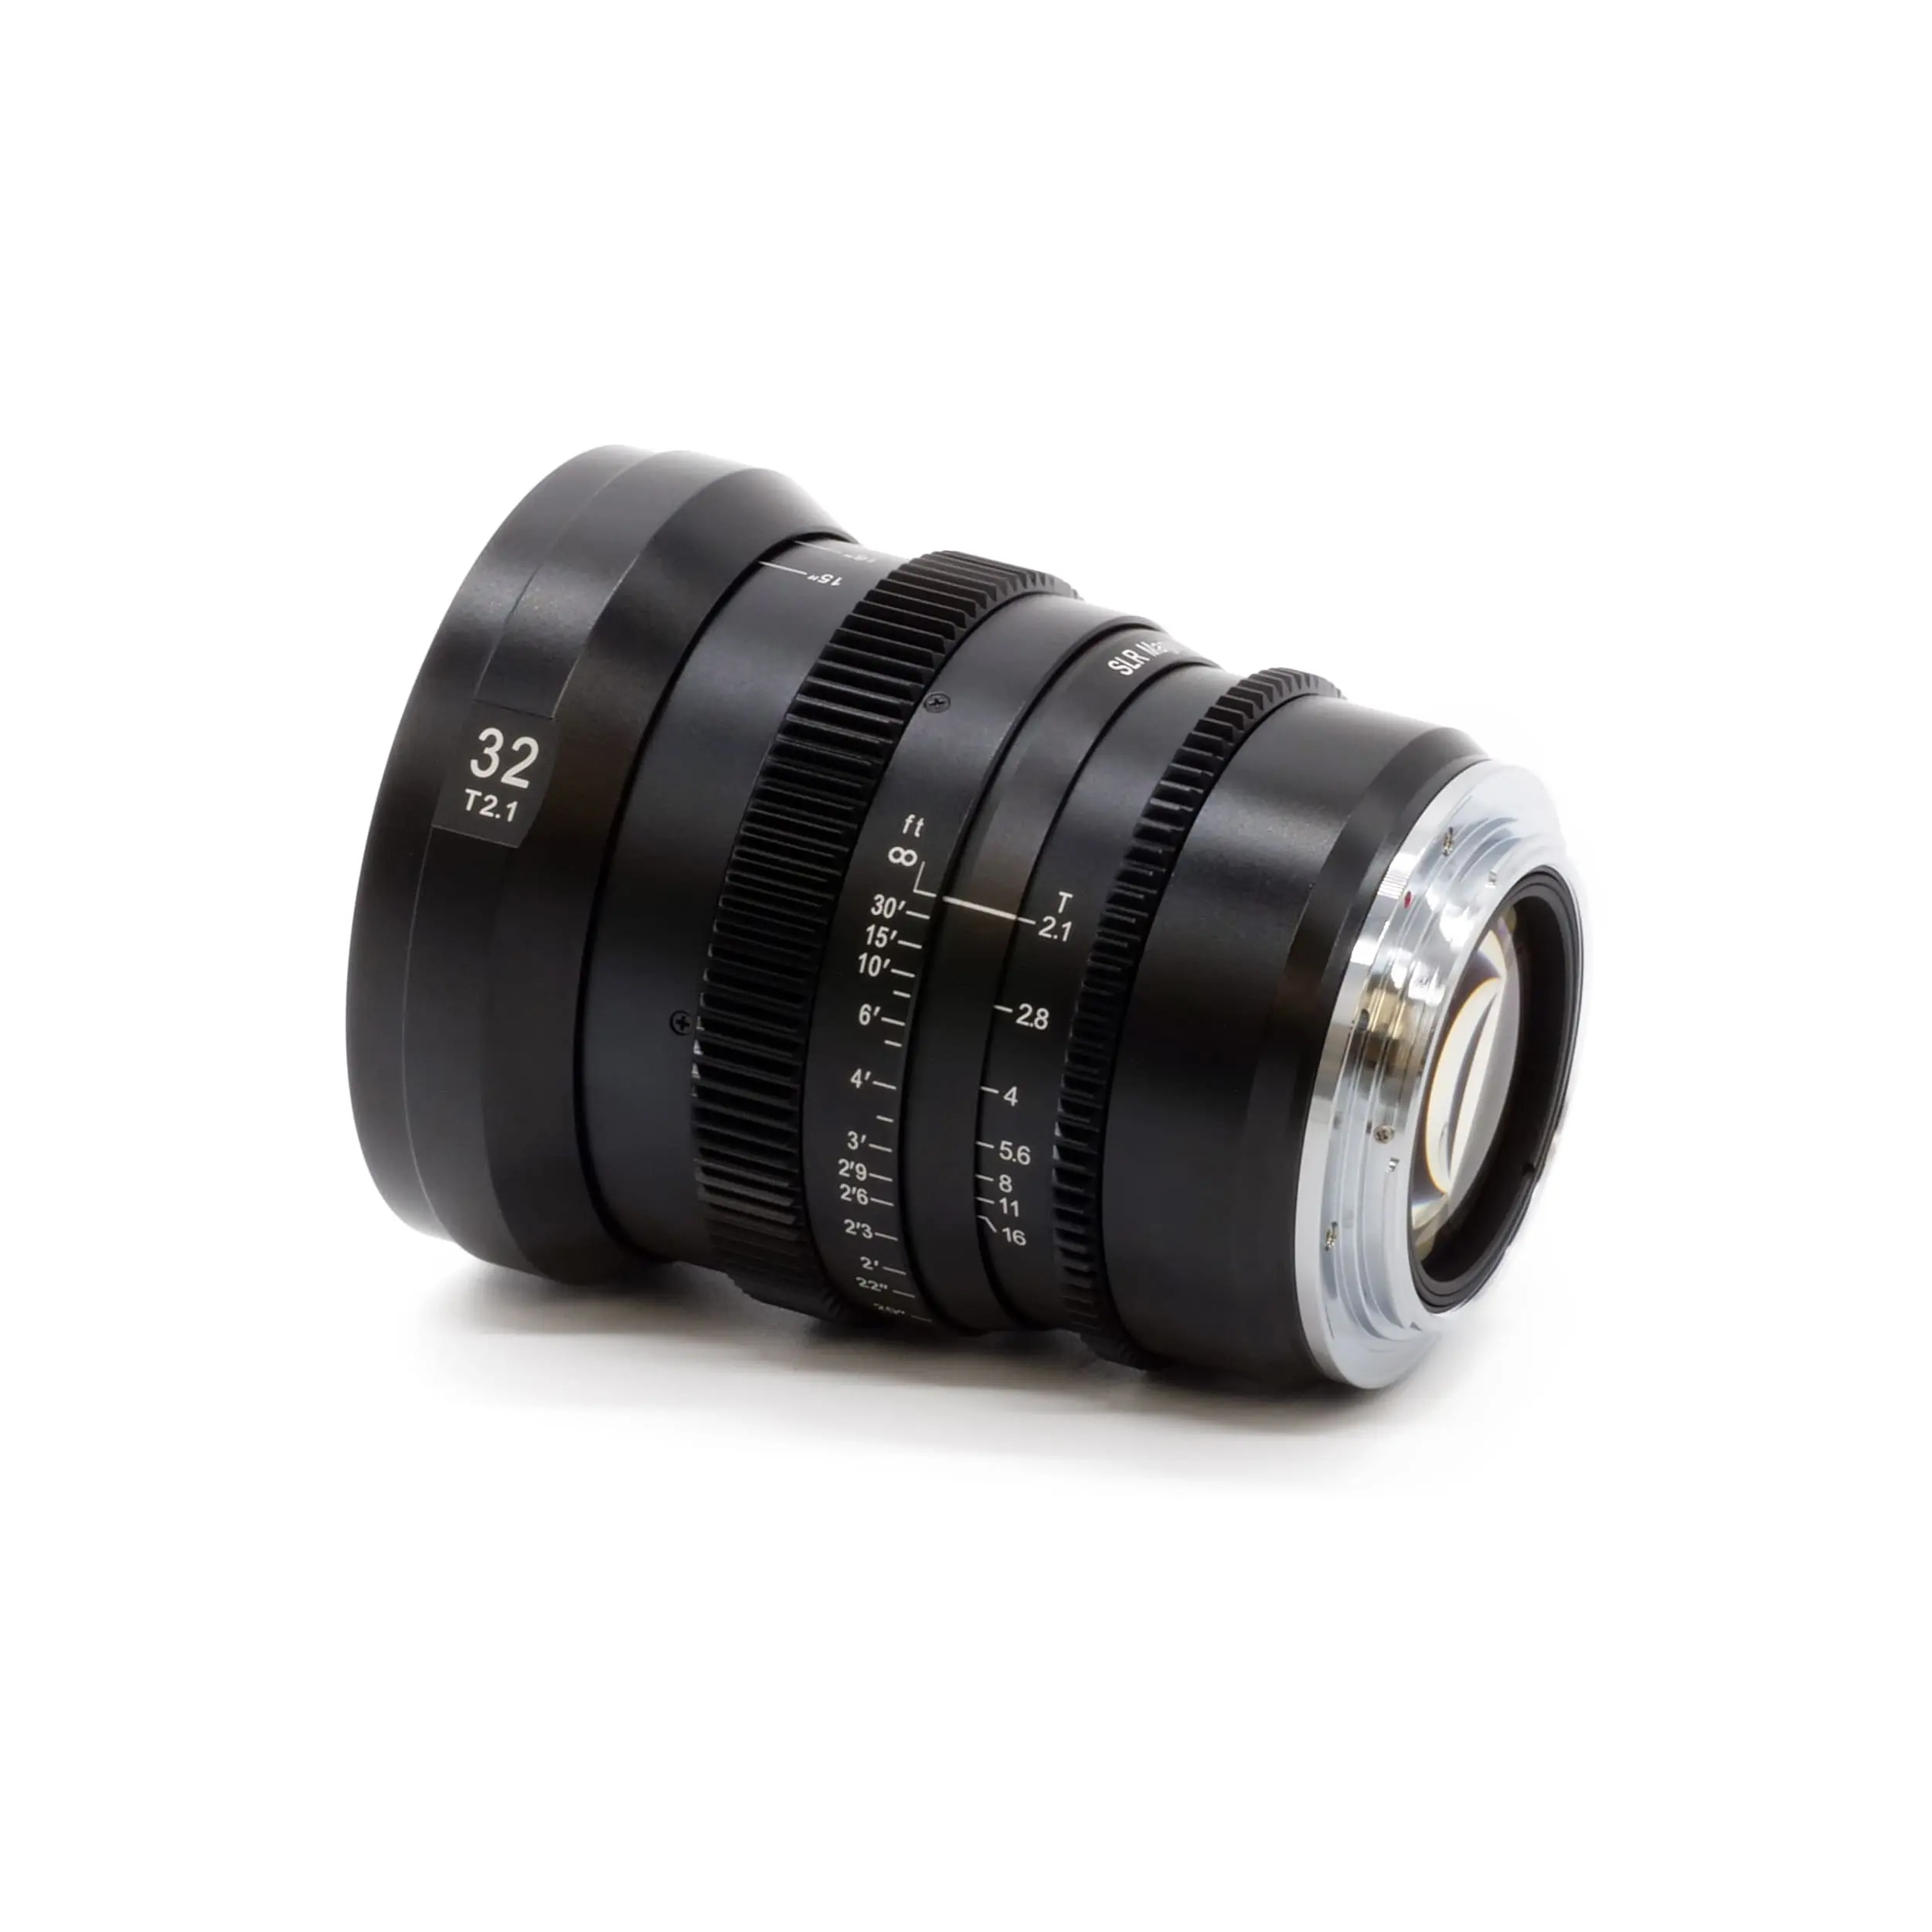 Slr magic apo microprime lente cinema, lente cinema grande angular 32mm t2.1, foco manual para canon ef-mount, pl-mount